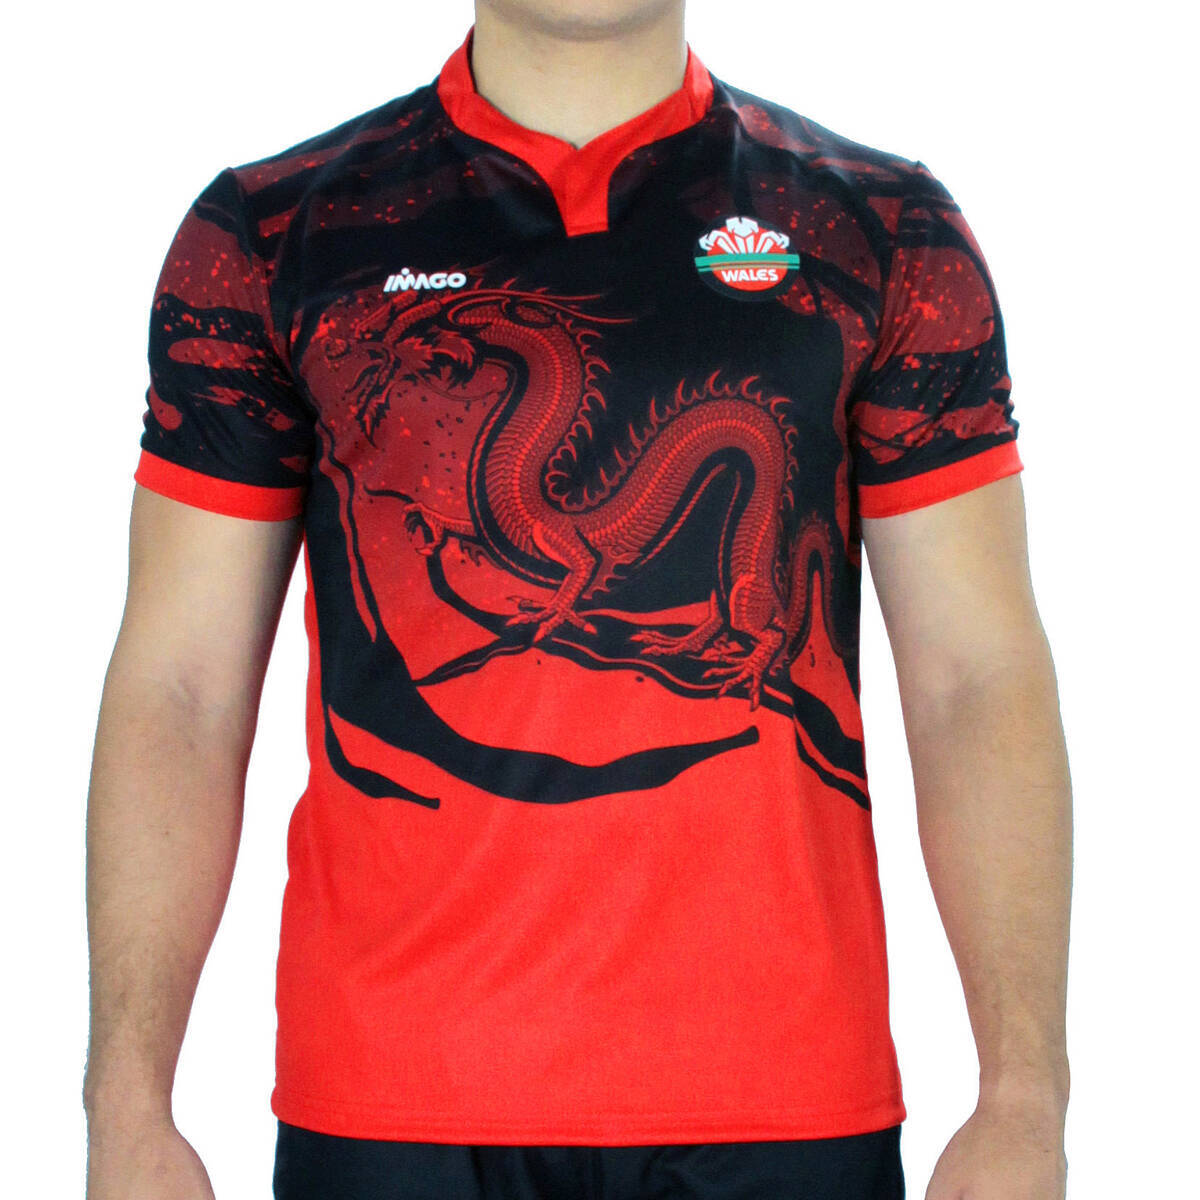 Camiseta Rugby Wales